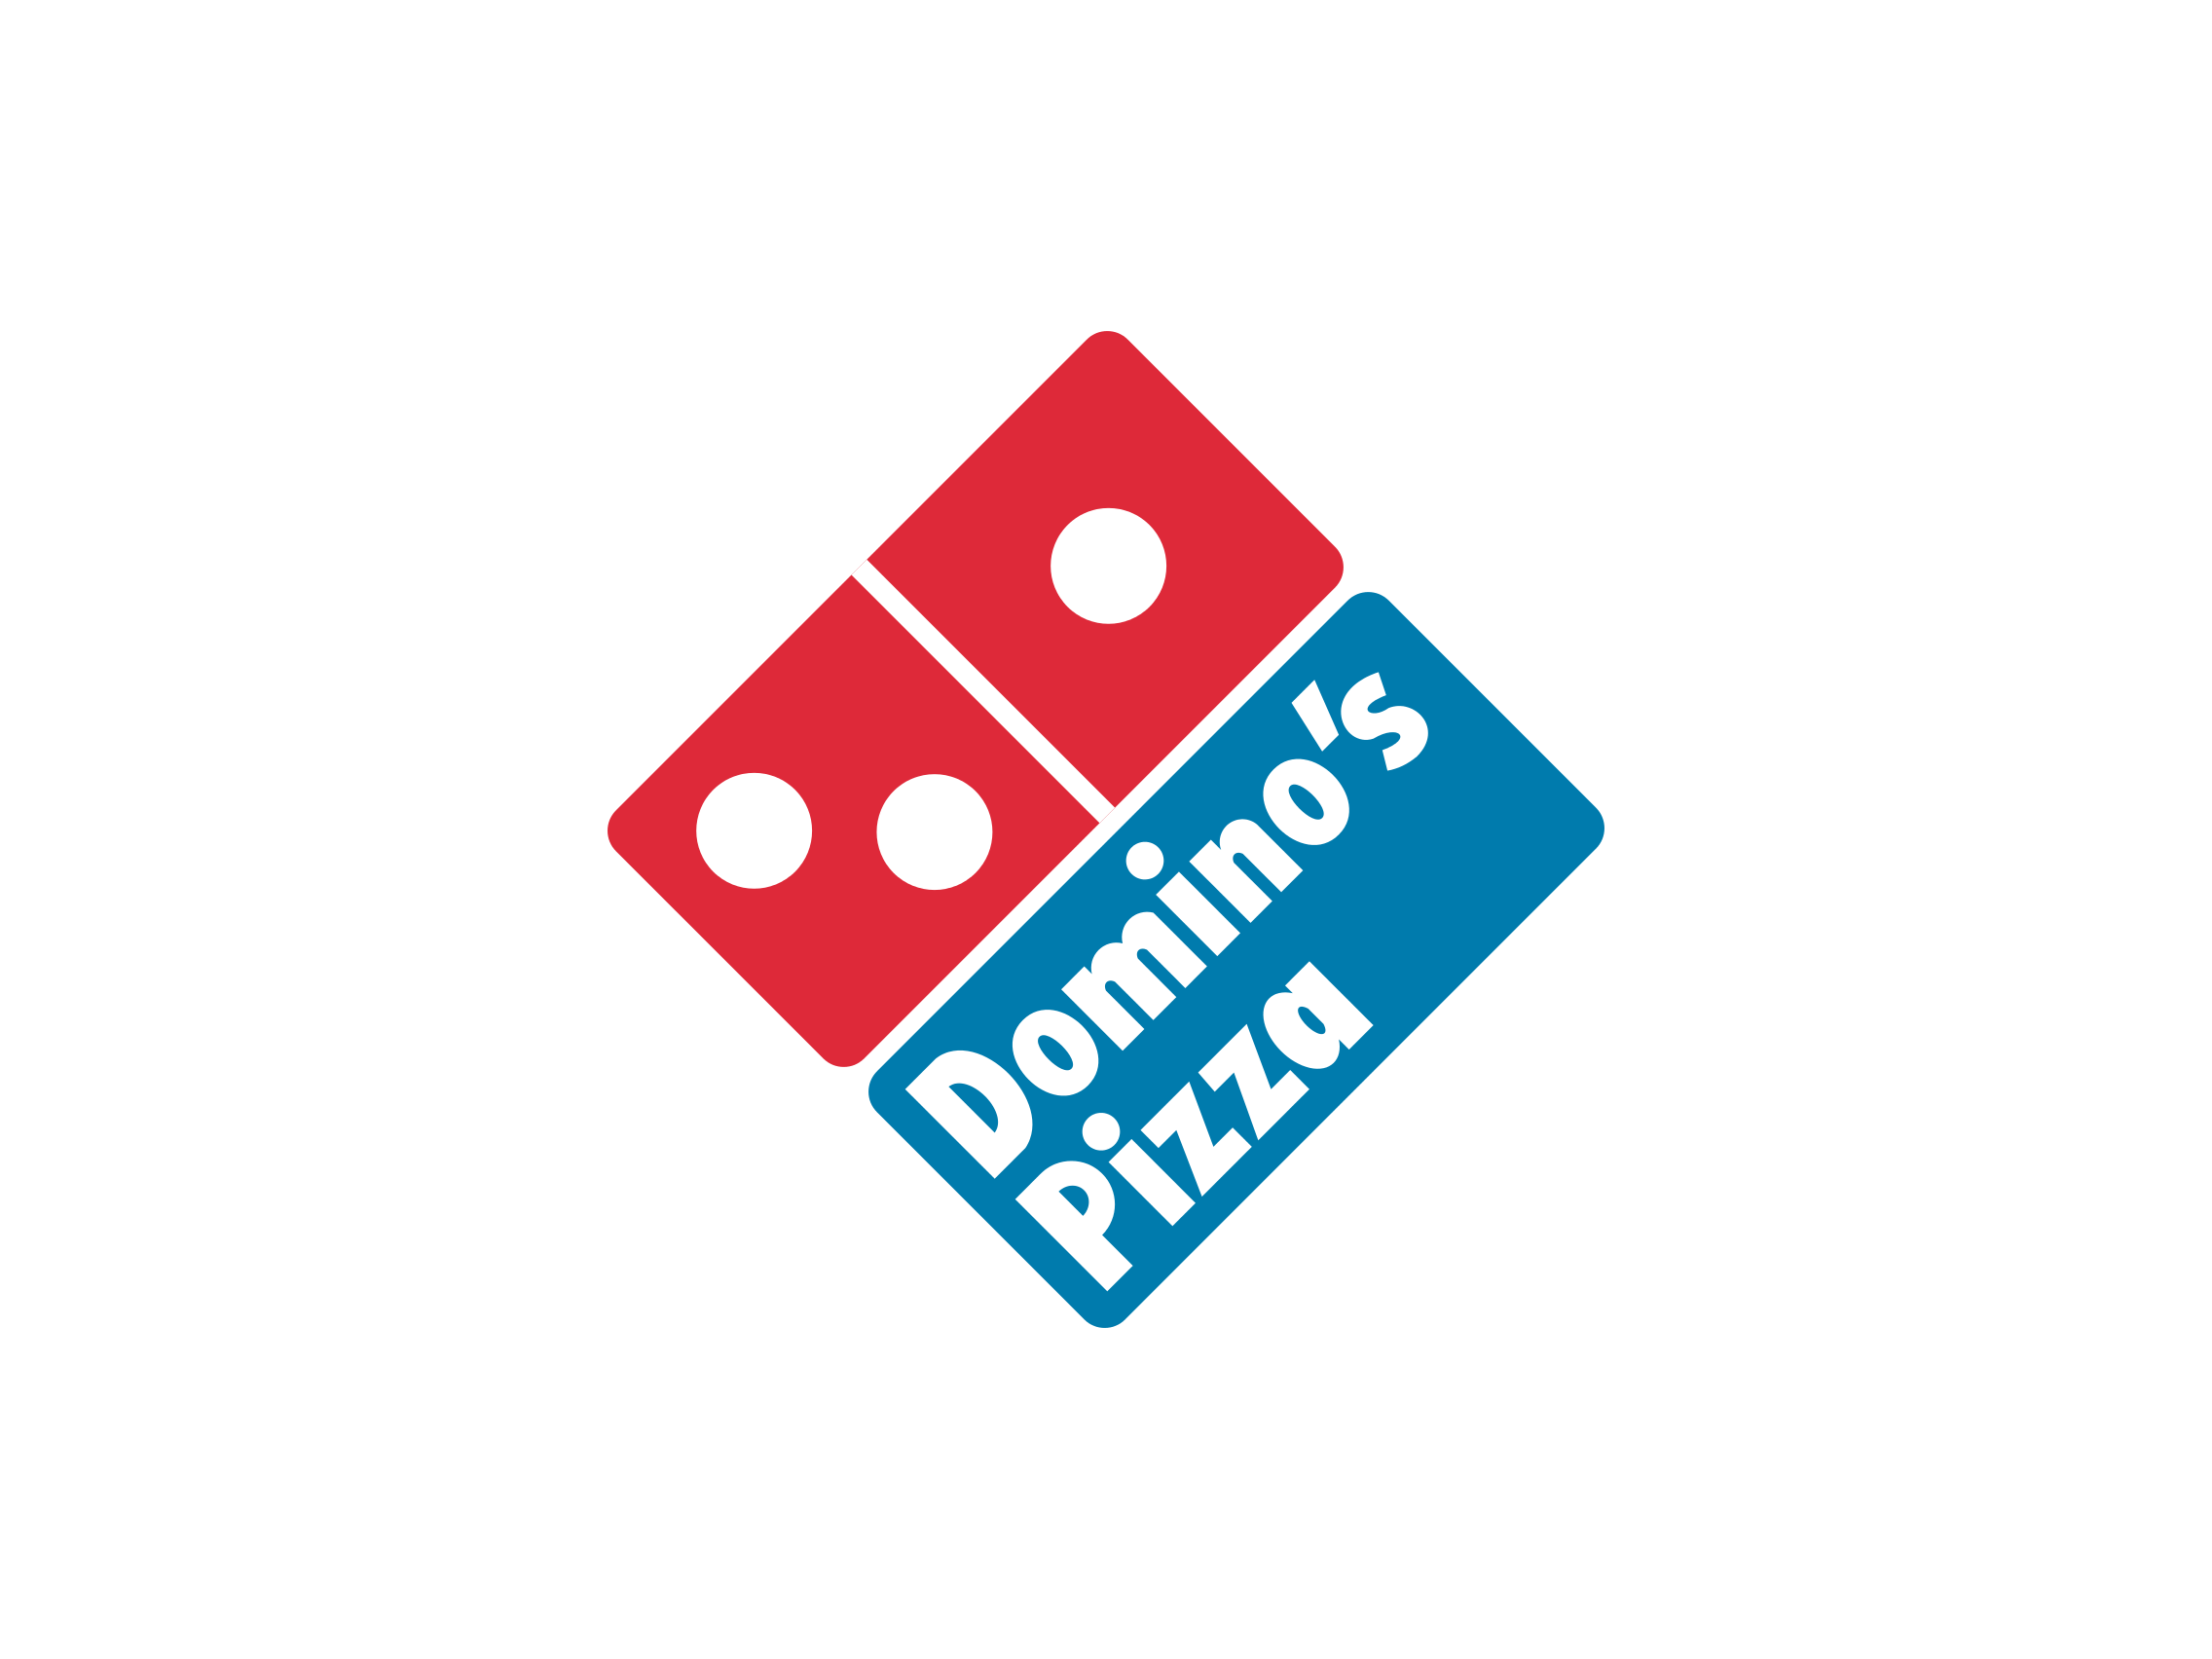 Domino symbol